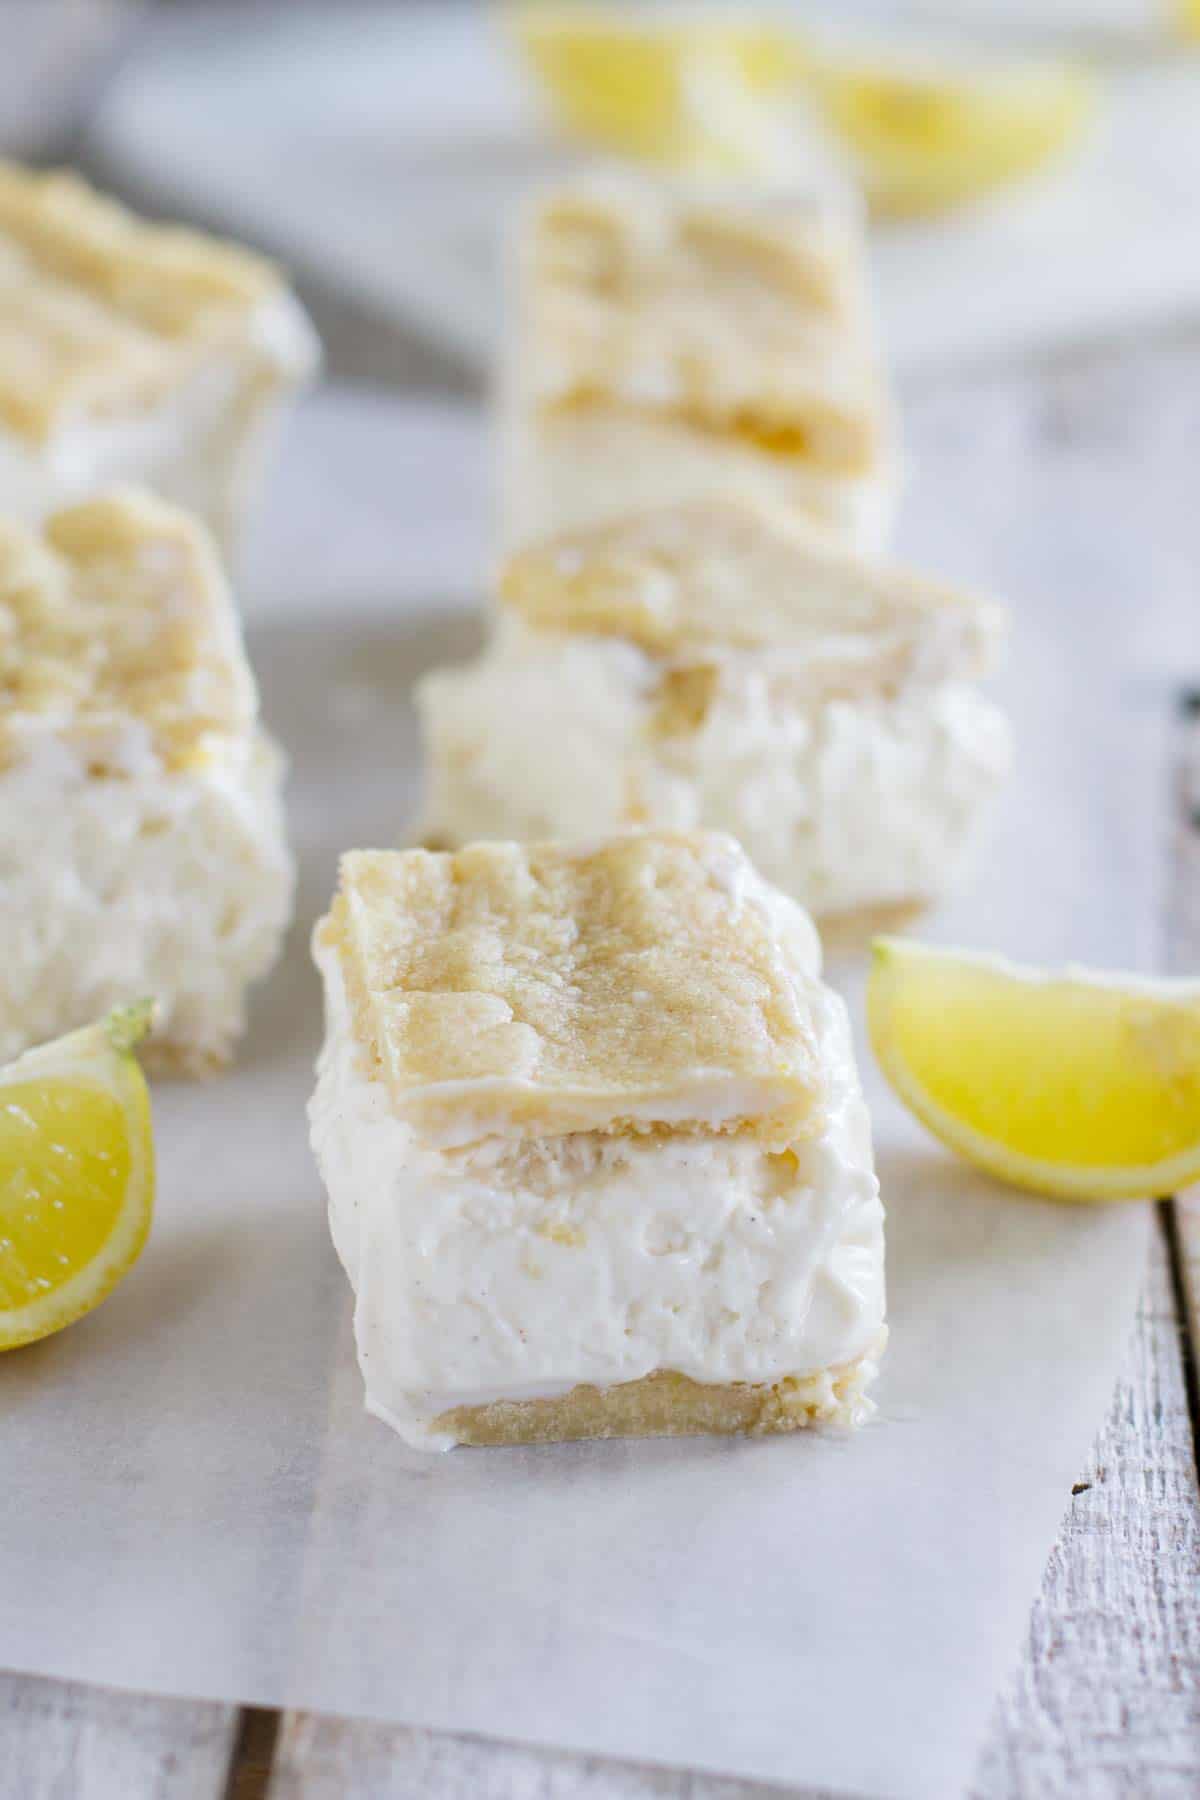 Lemon Ice Cream Sandwiches with lemon slices